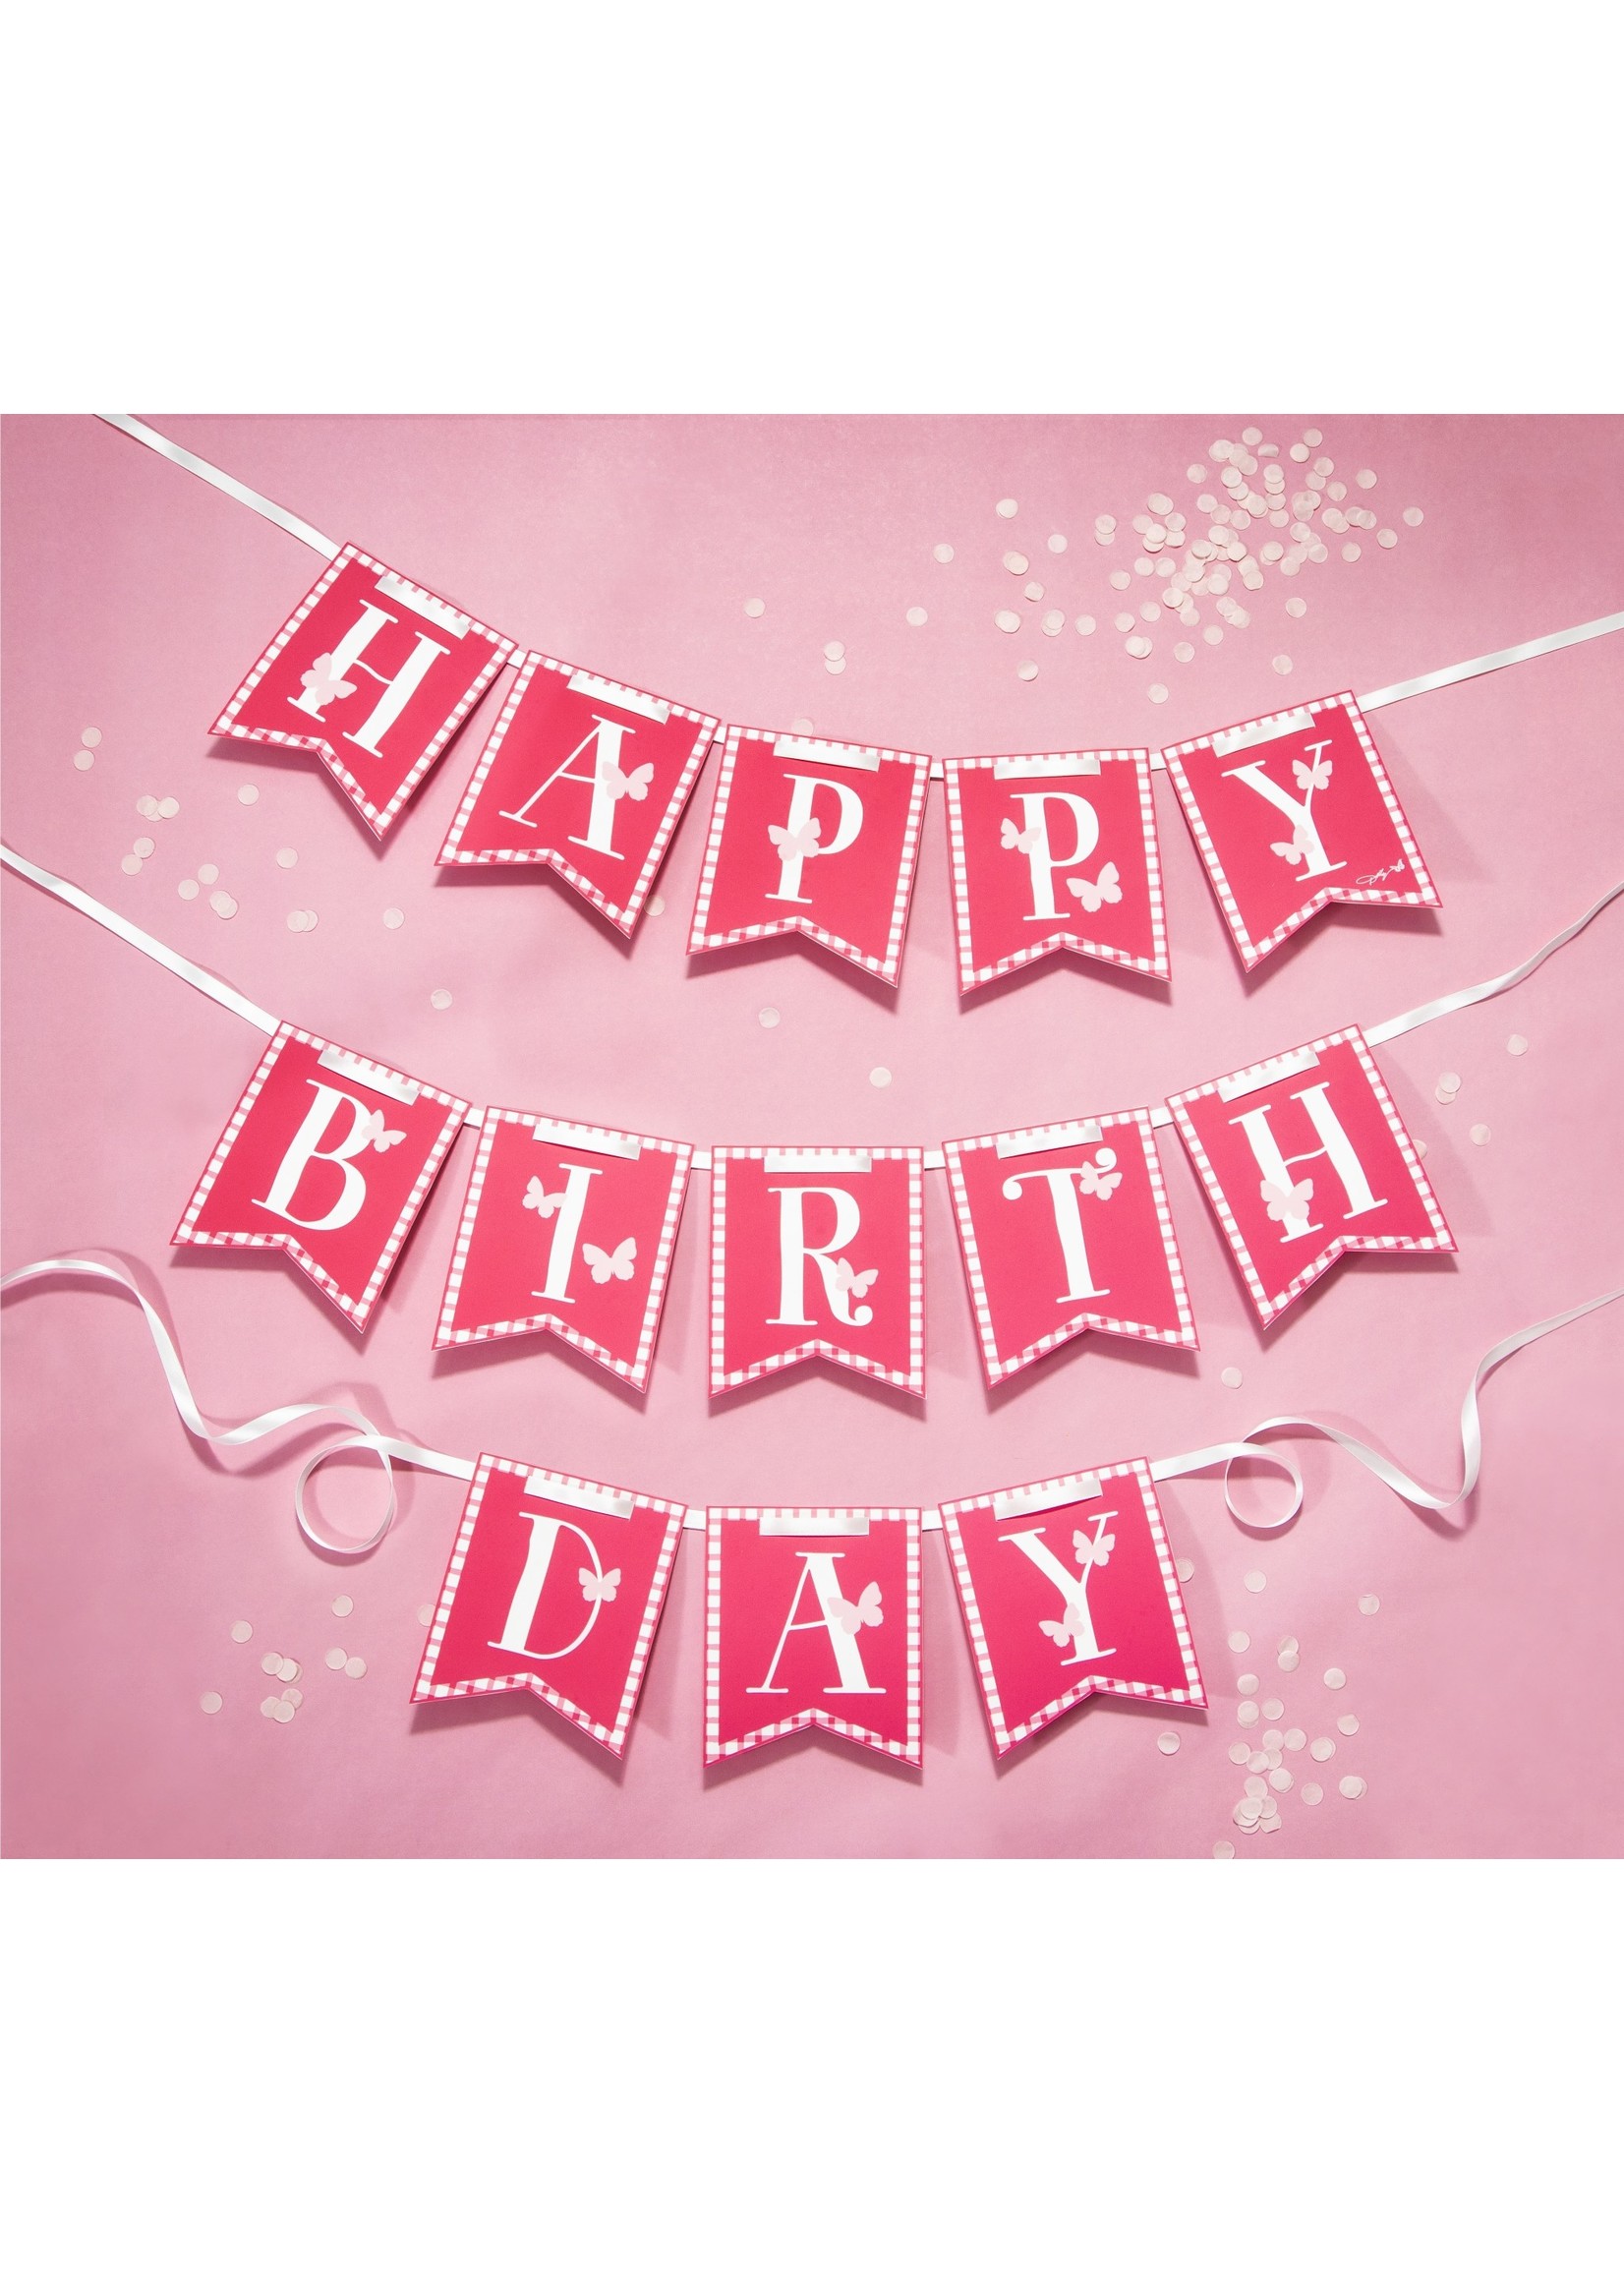 Dolly Parton Happy Birthday Ribbon Banner - Party On!